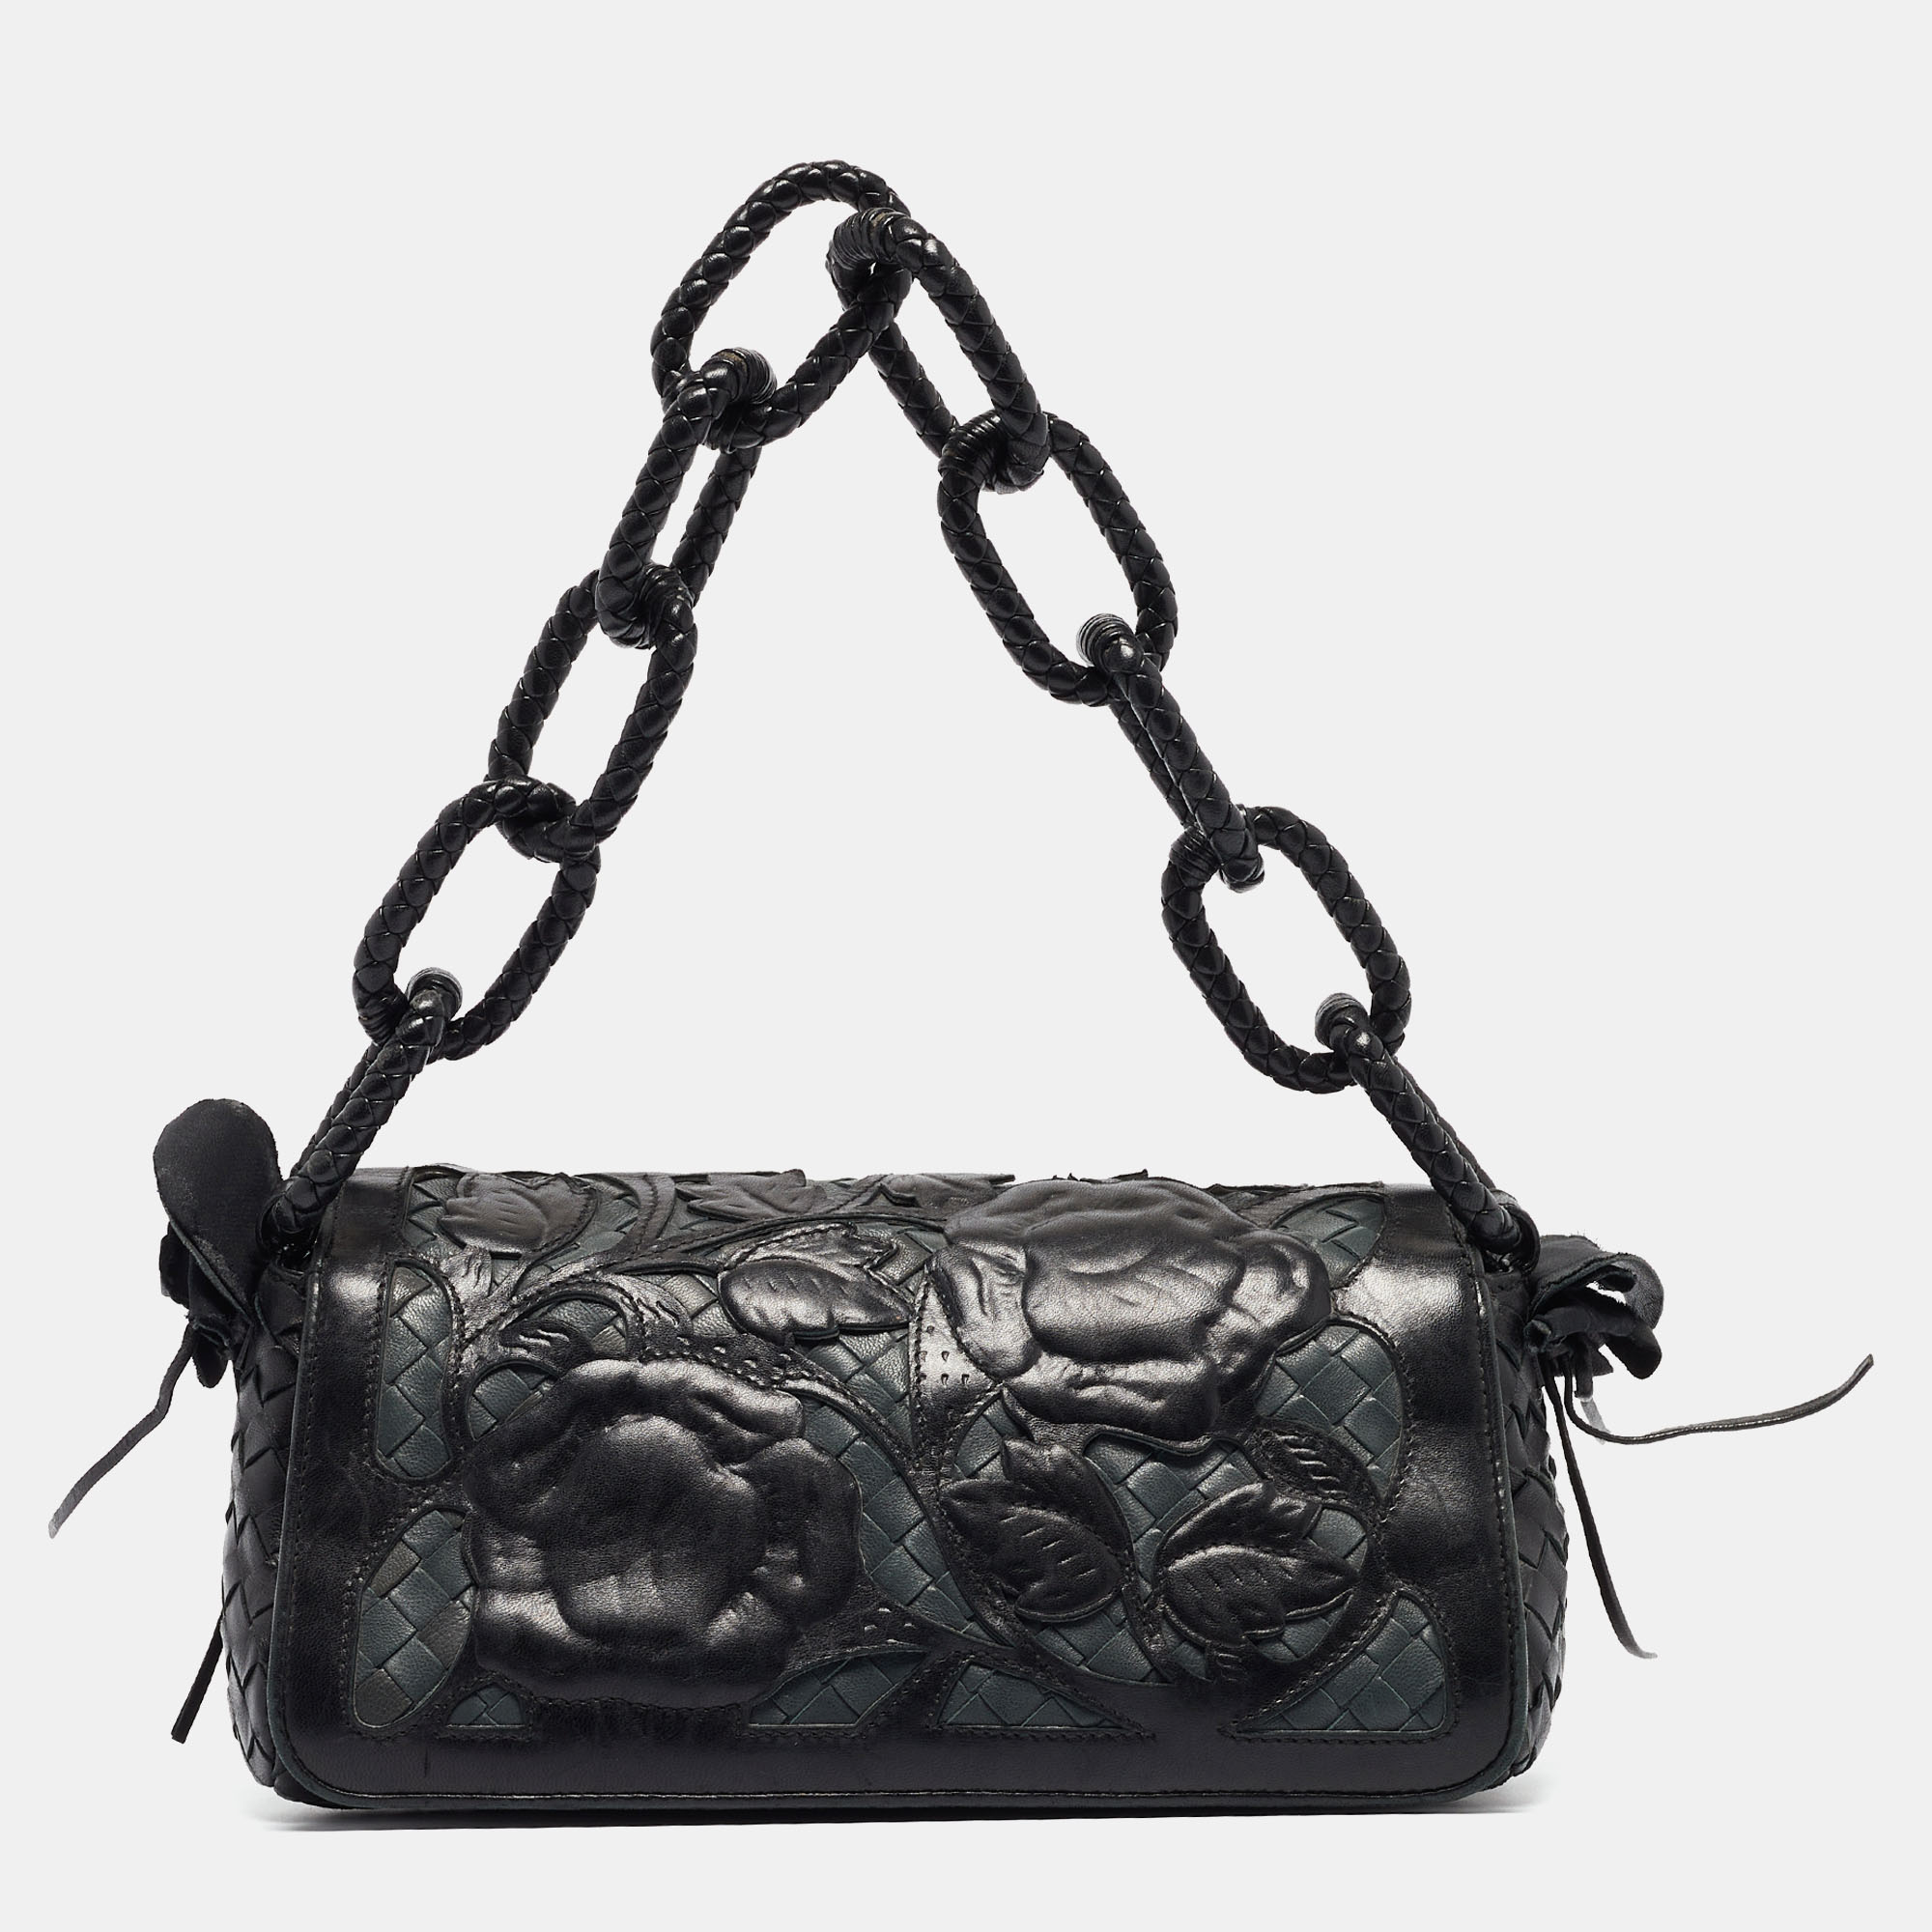 Pre-owned Bottega Veneta Black Intrecciato Leather Limited Edition 050/150 Floral Applique Sienna Bag